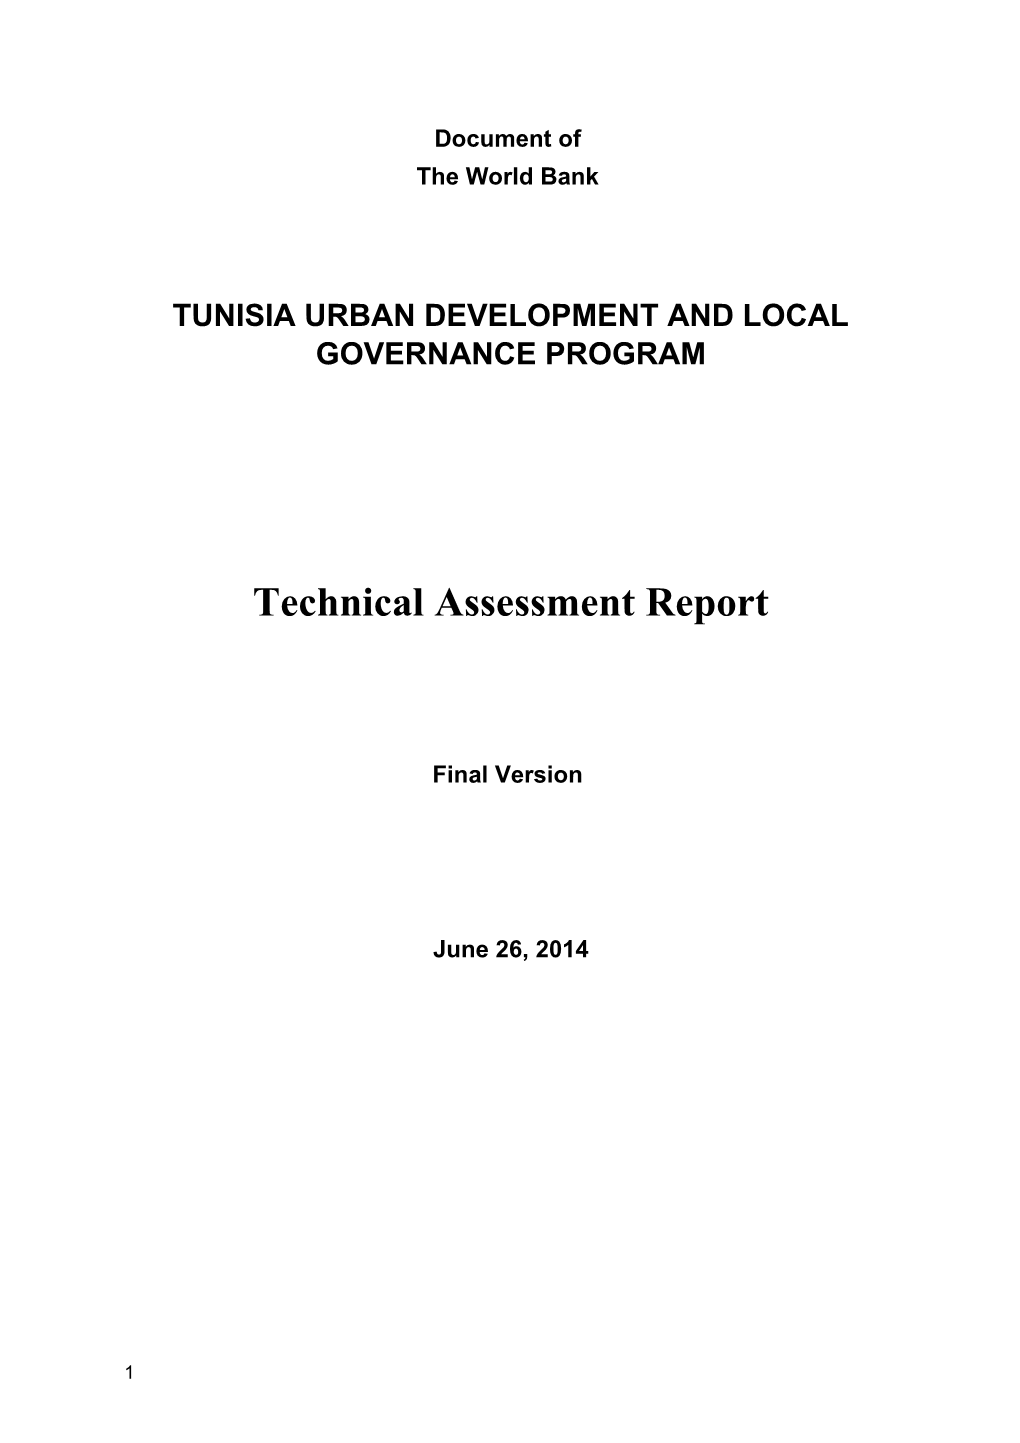 Tunisia Urban Development and Local Governance Program s1